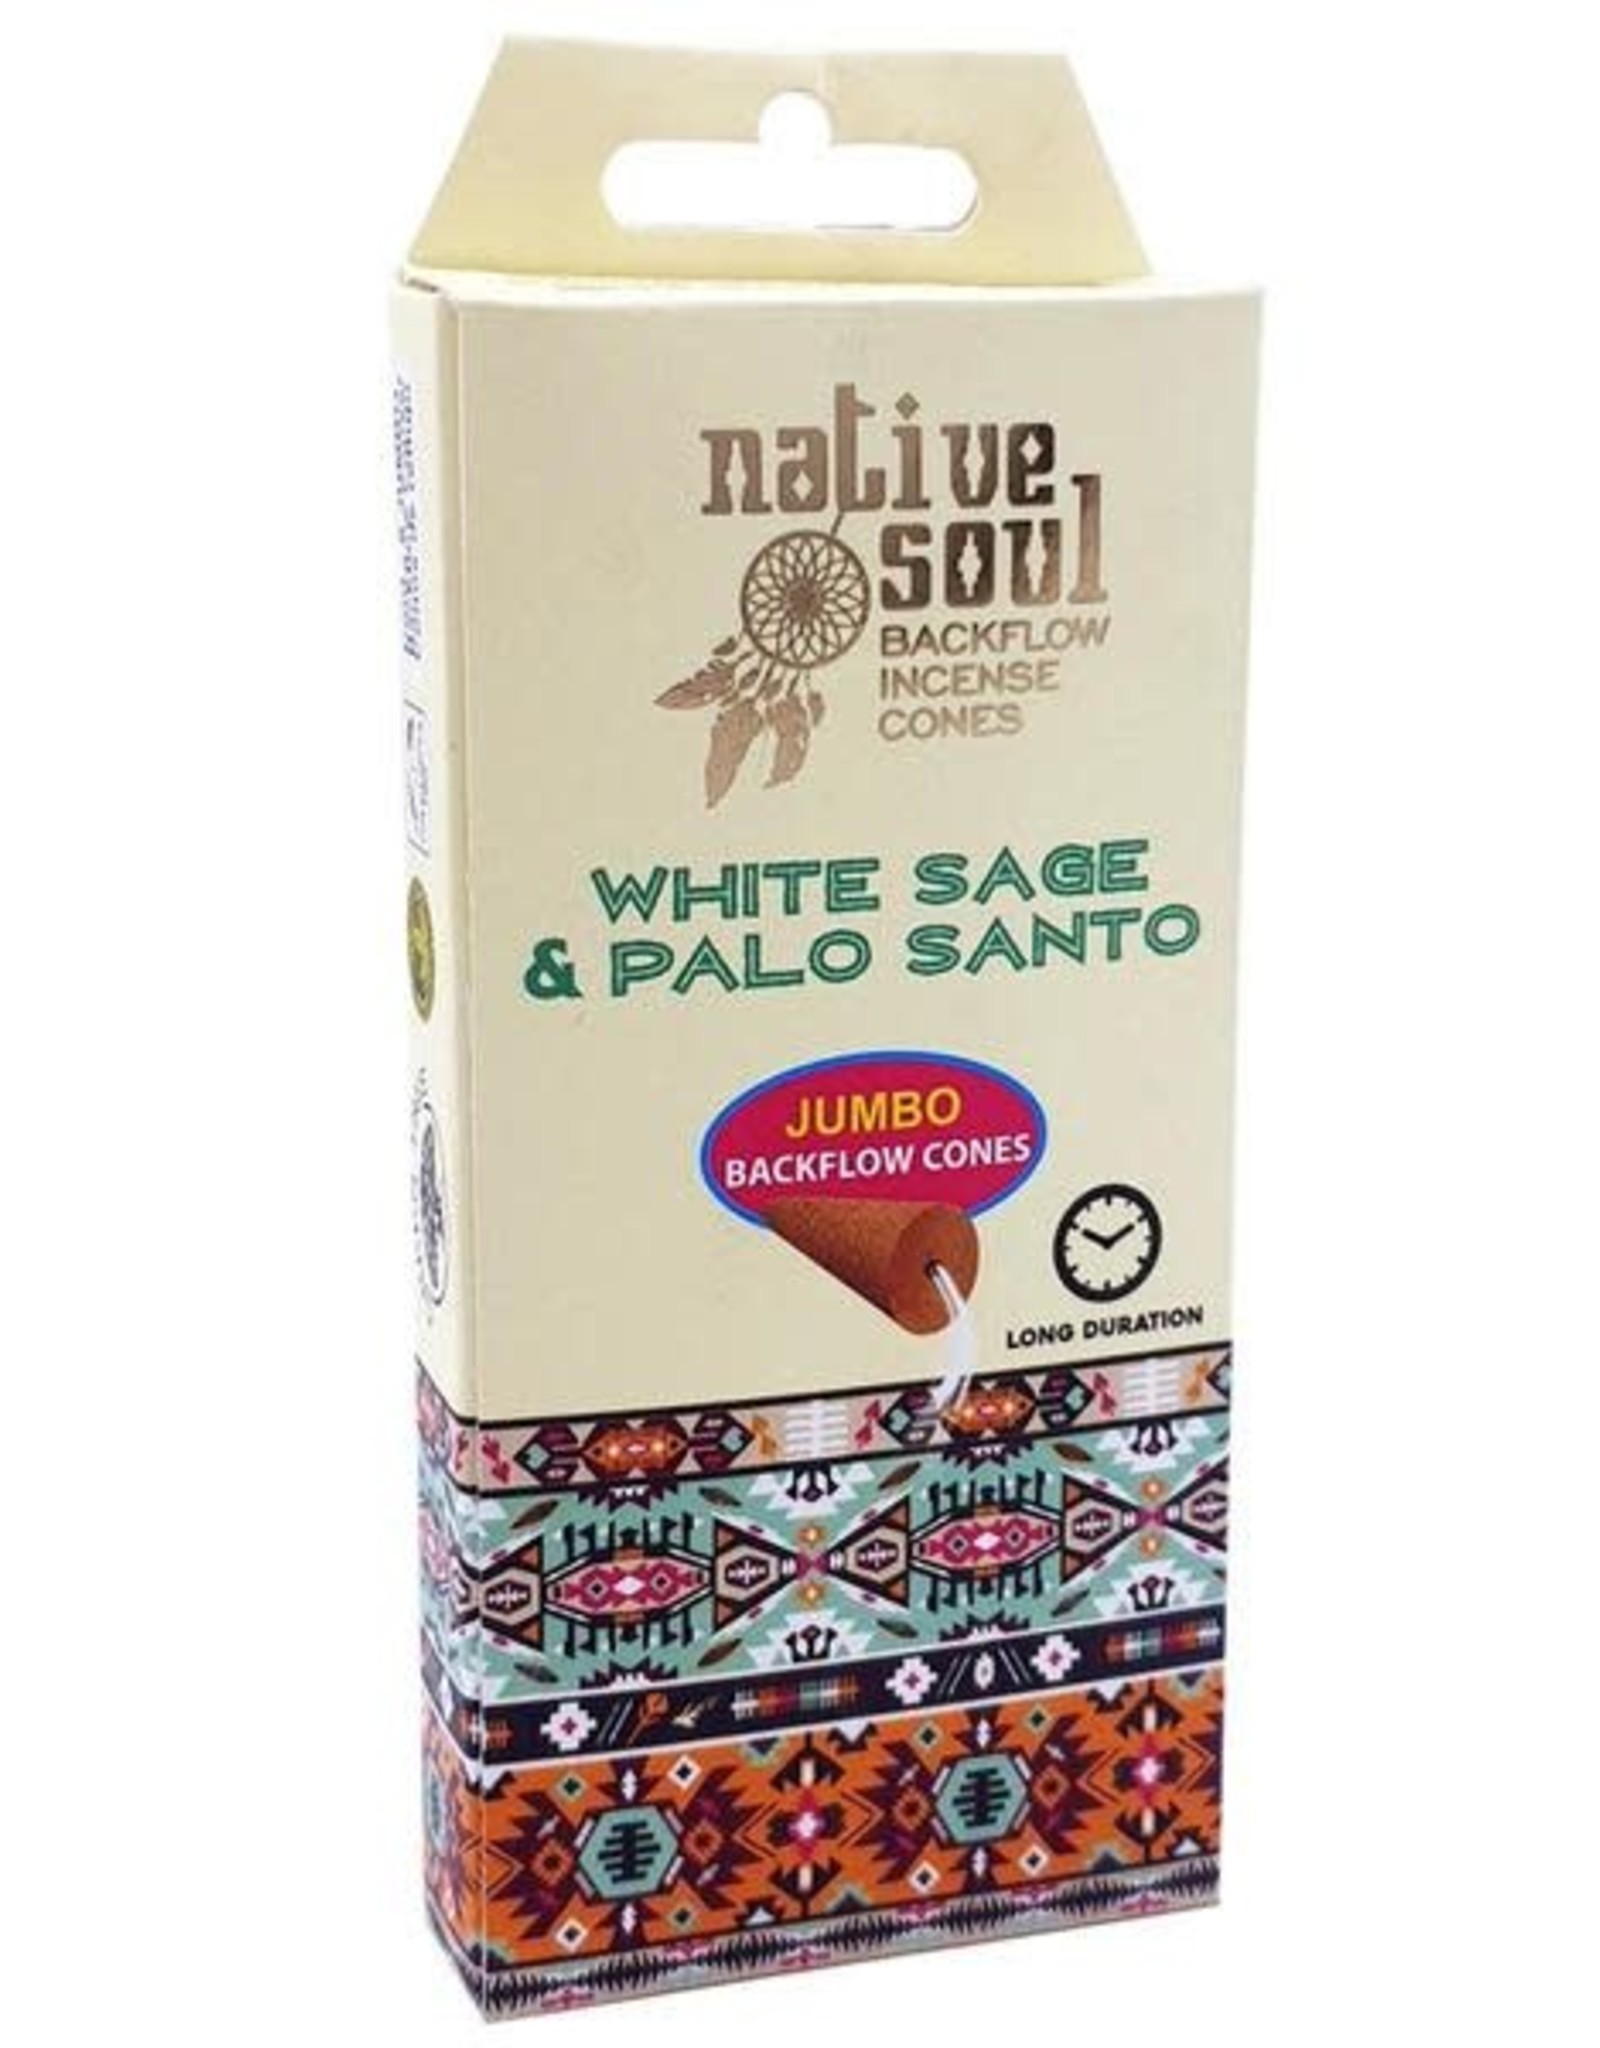 Kheops International White Sage & Palo Santo Jumbo BF Cones